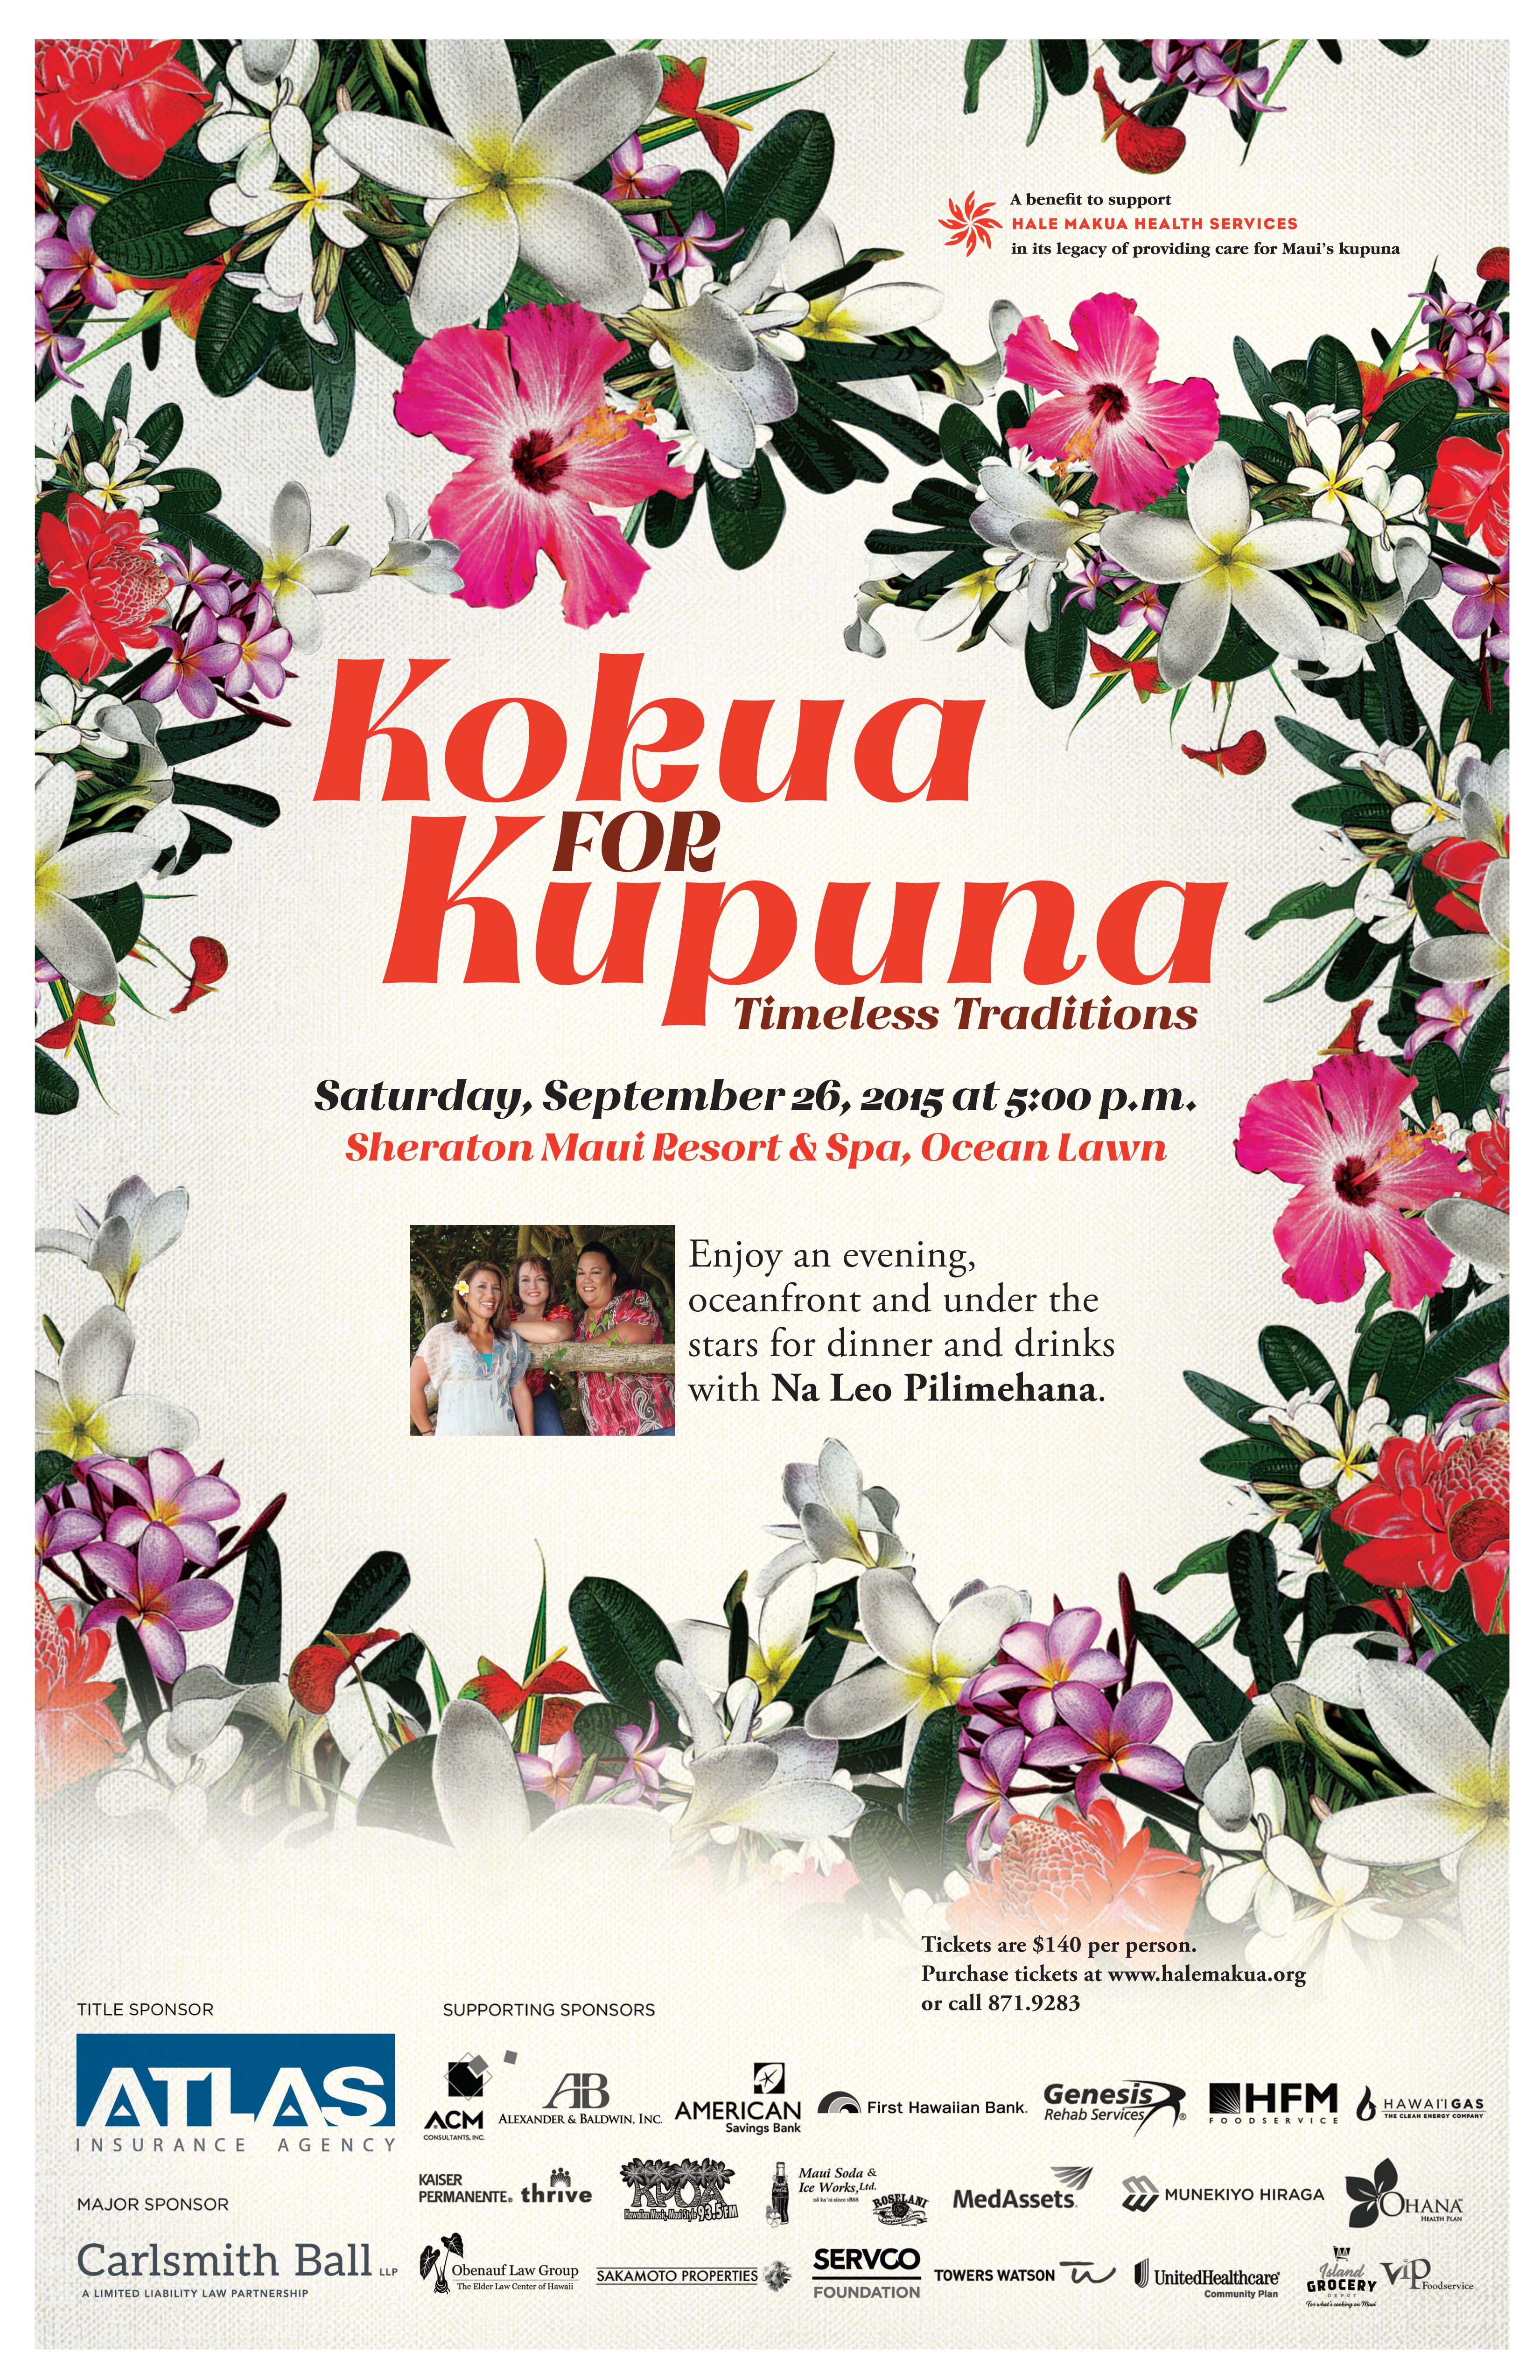 Kōkua for Kupuna fundraiser flyer. Courtesy image.